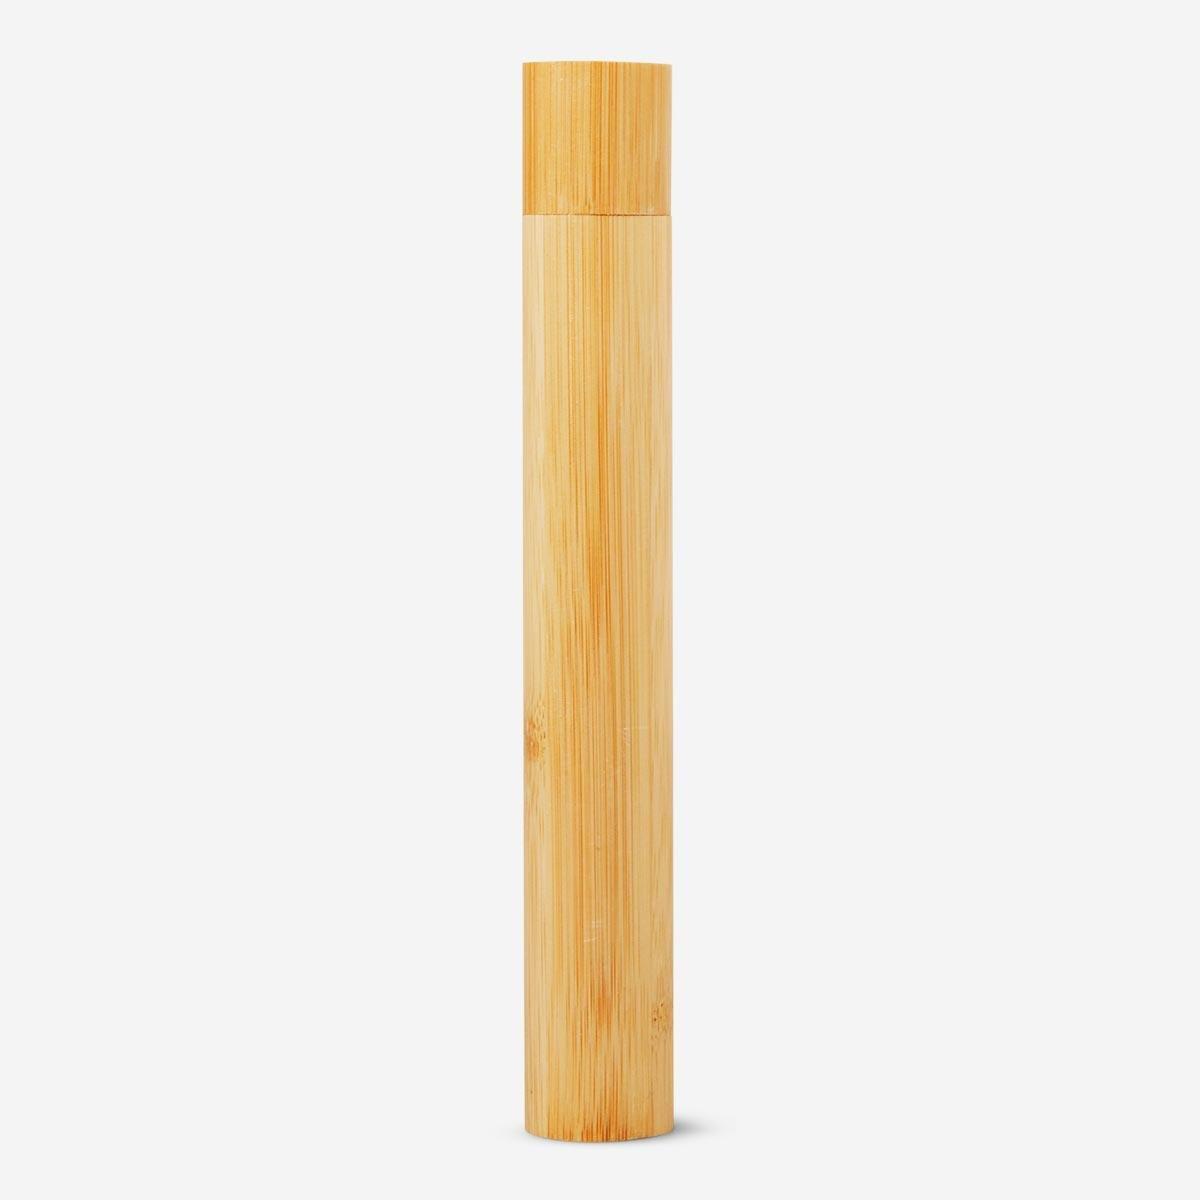 Bamboo toothbrush holder